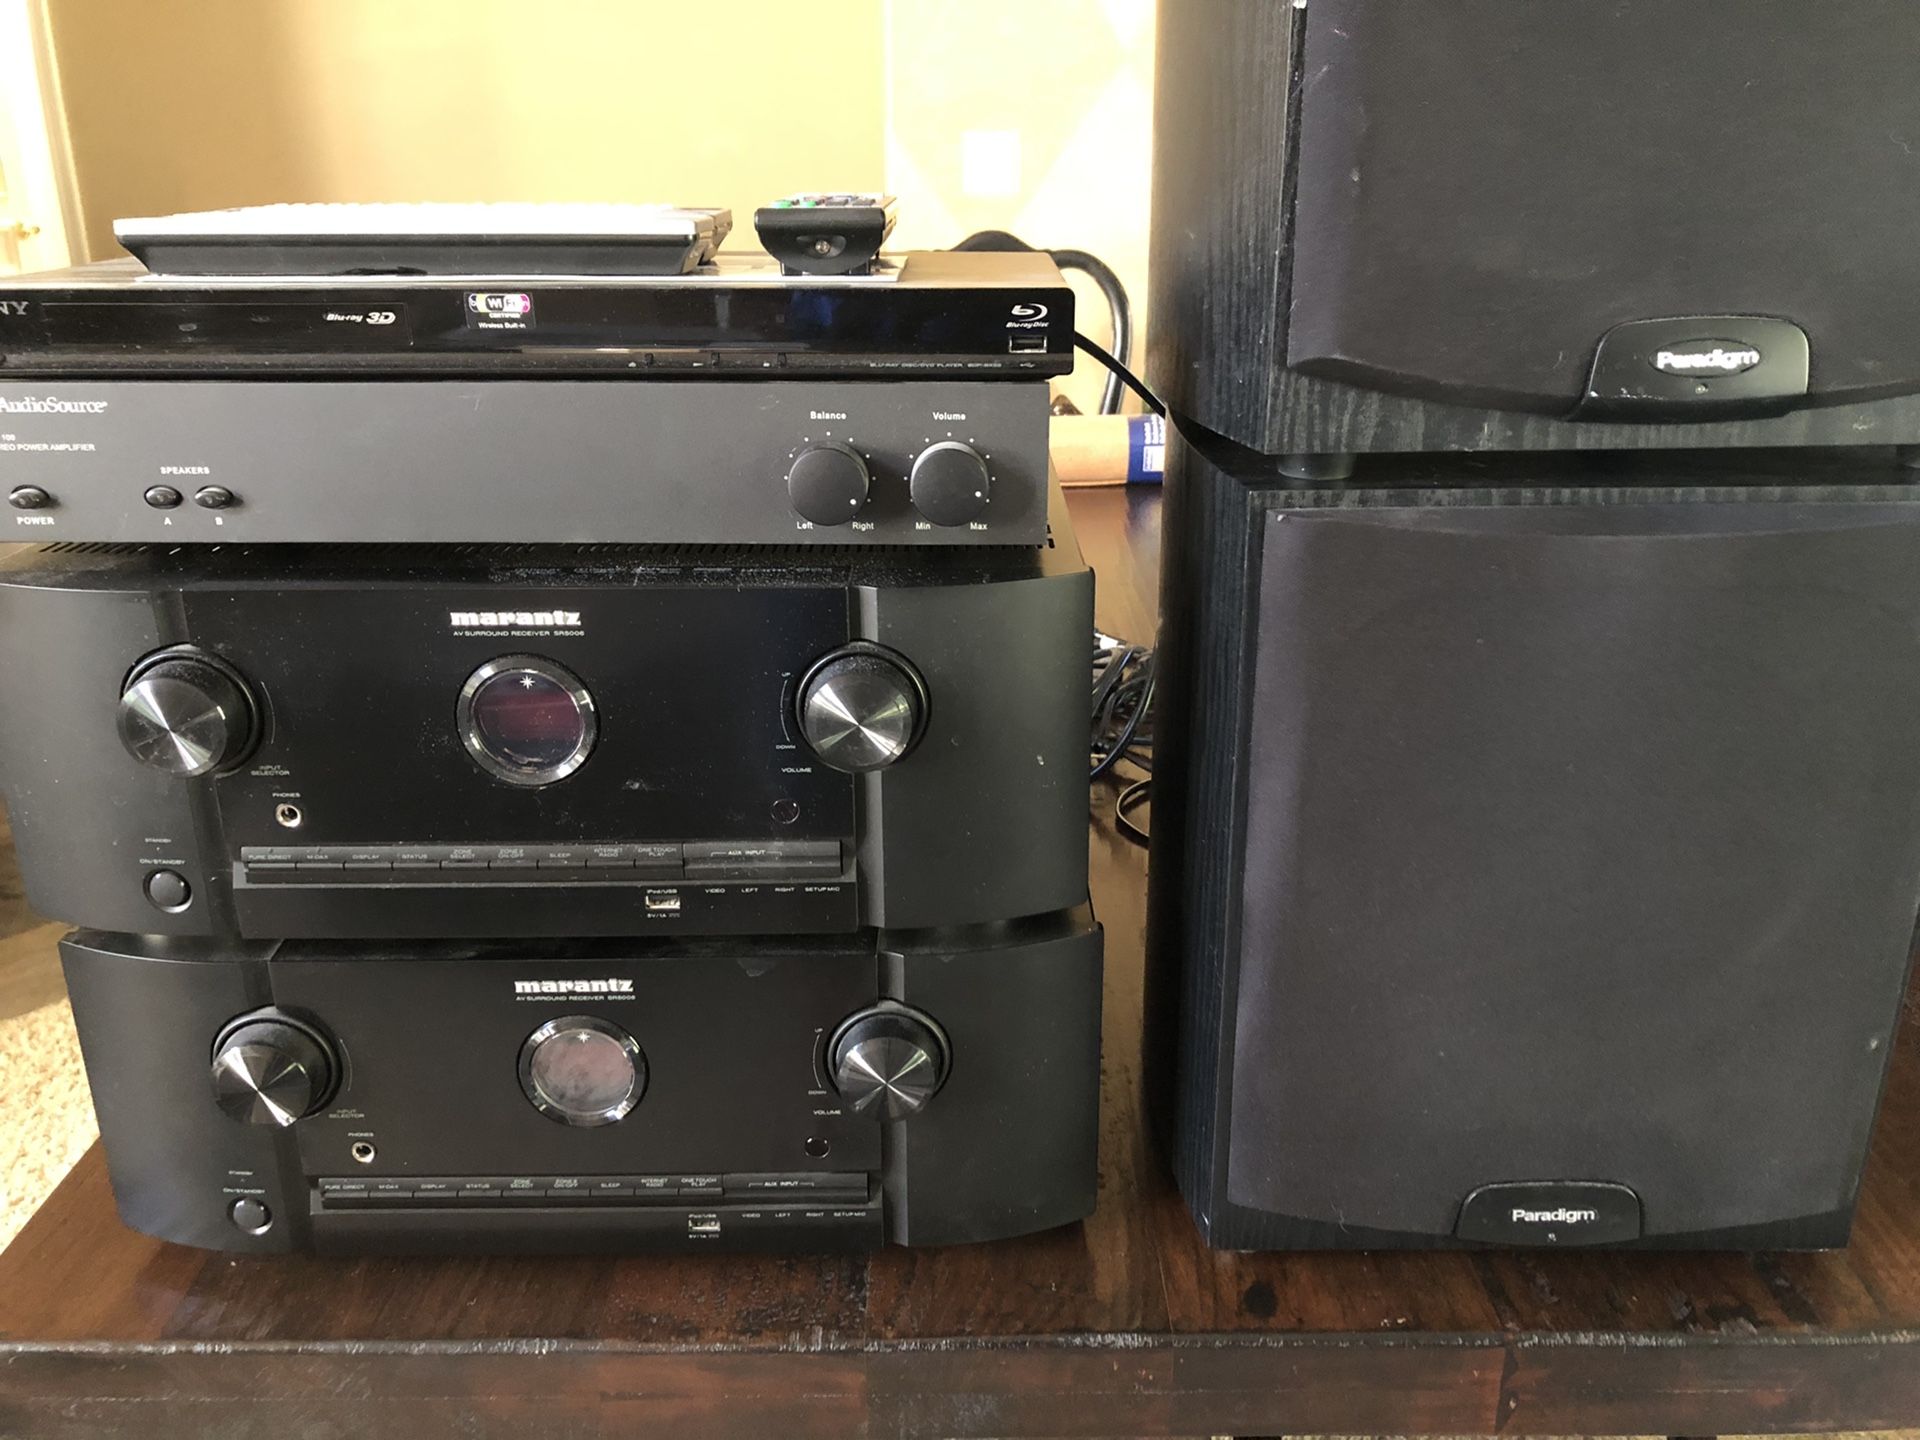 Stereo equipment